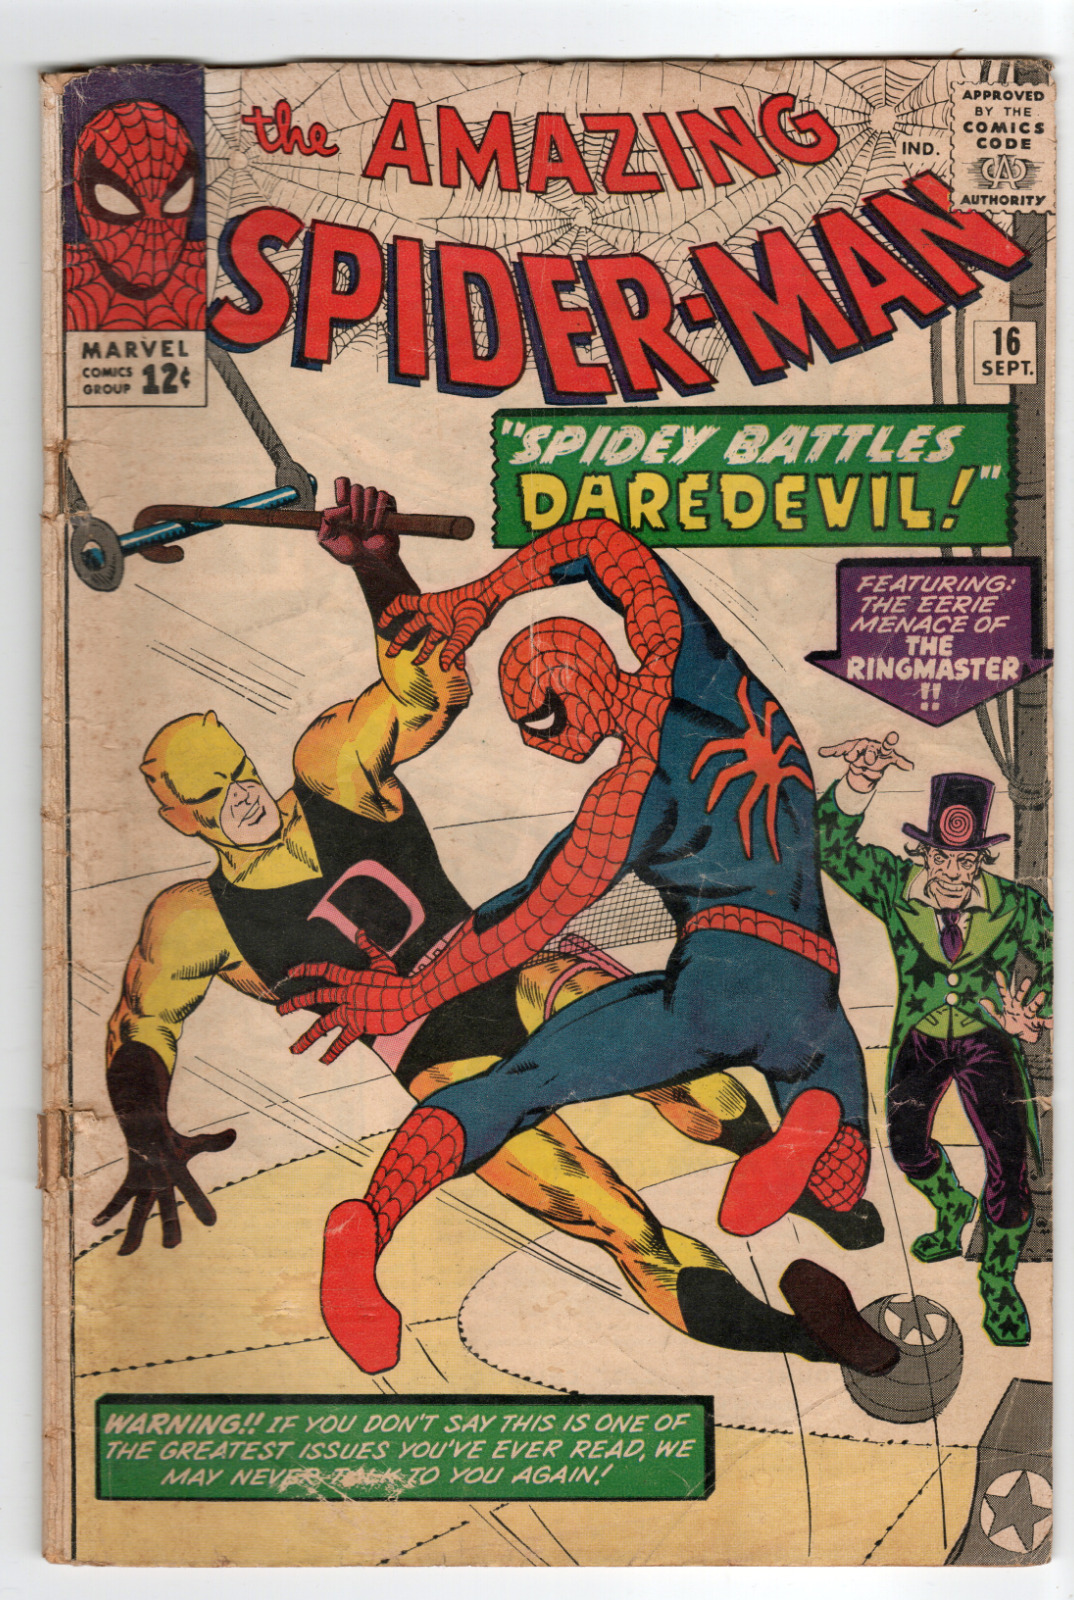 Amazing Spider-Man #16 Marvel Comics 1964 1st Meeting Daredevil and Spider-Man